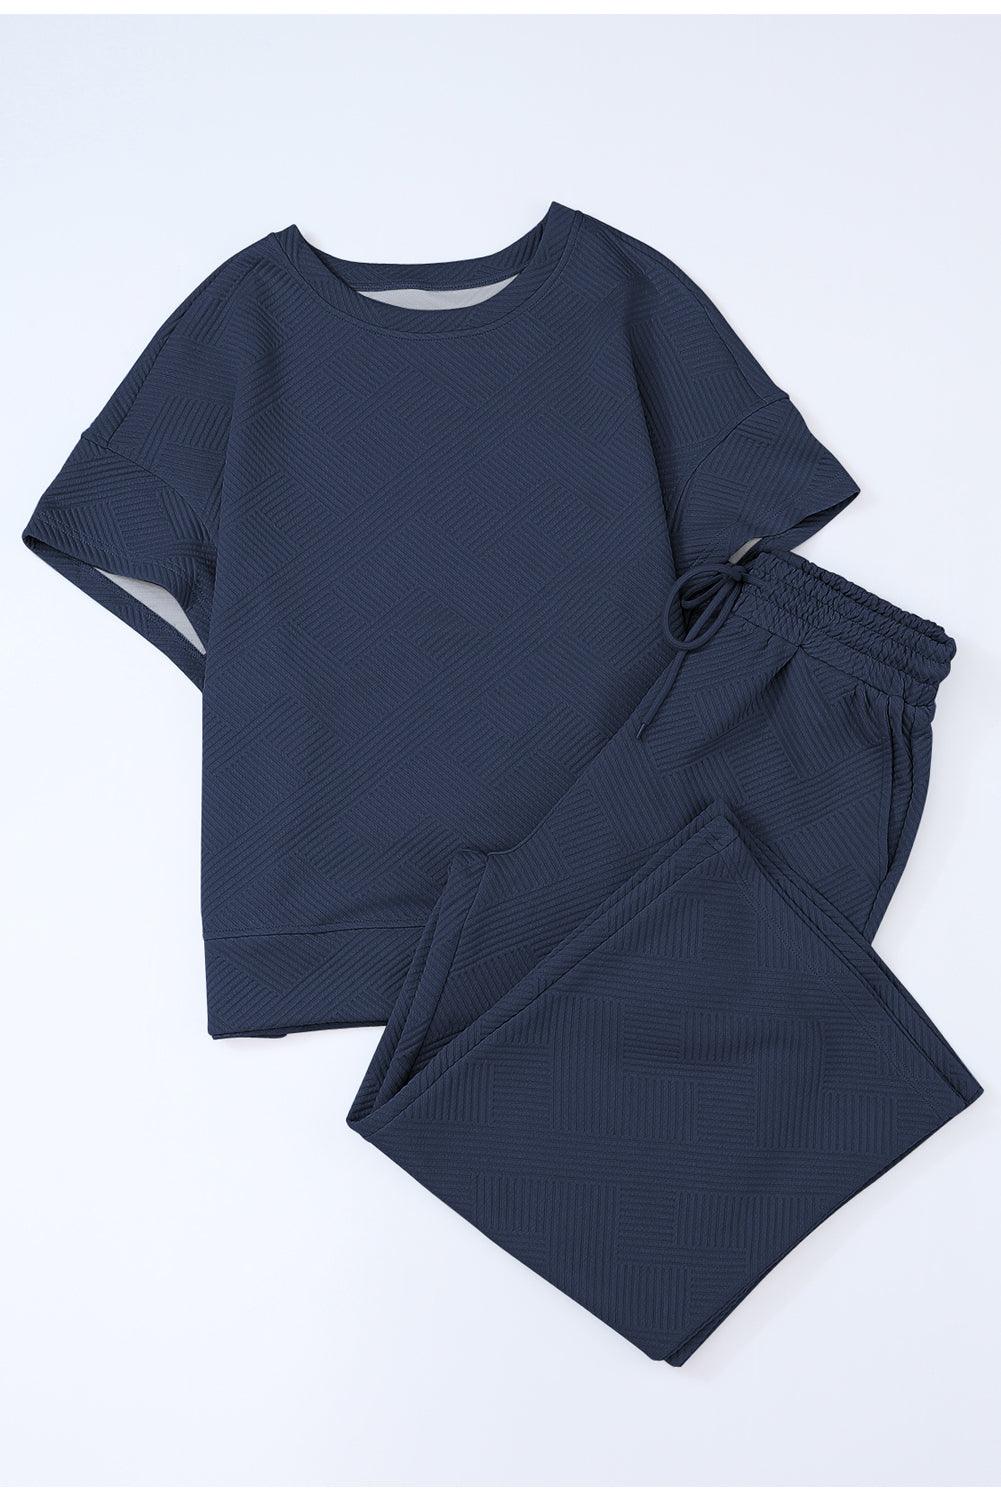 Navy Blue Textured Loose Fit T Shirt and Drawstring Pants Set - L & M Kee, LLC